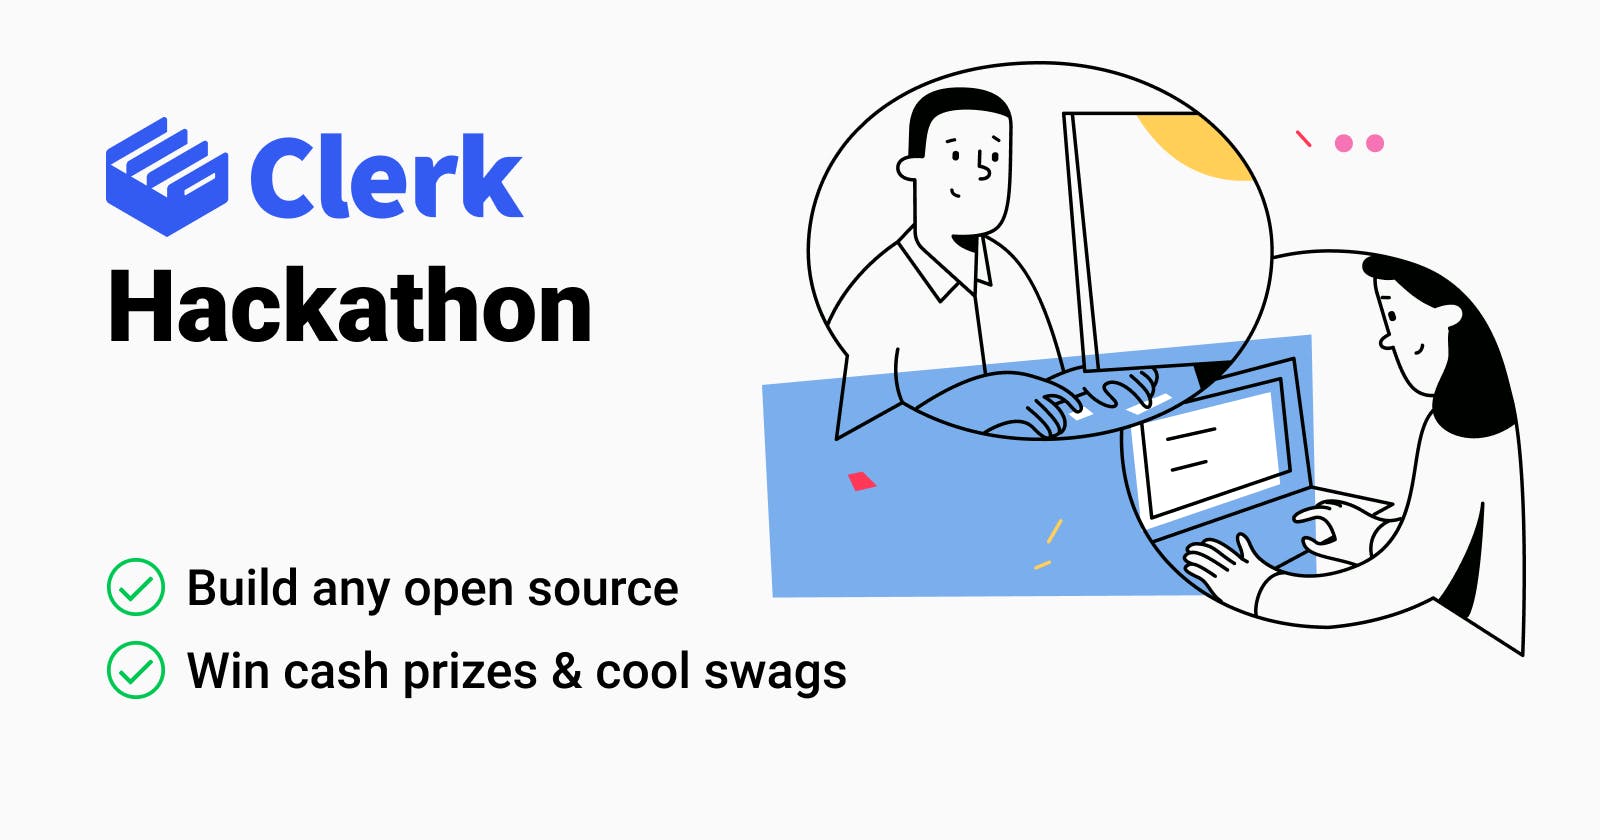 A New Hackathon? The Clerk and Hashnode Hackathon!